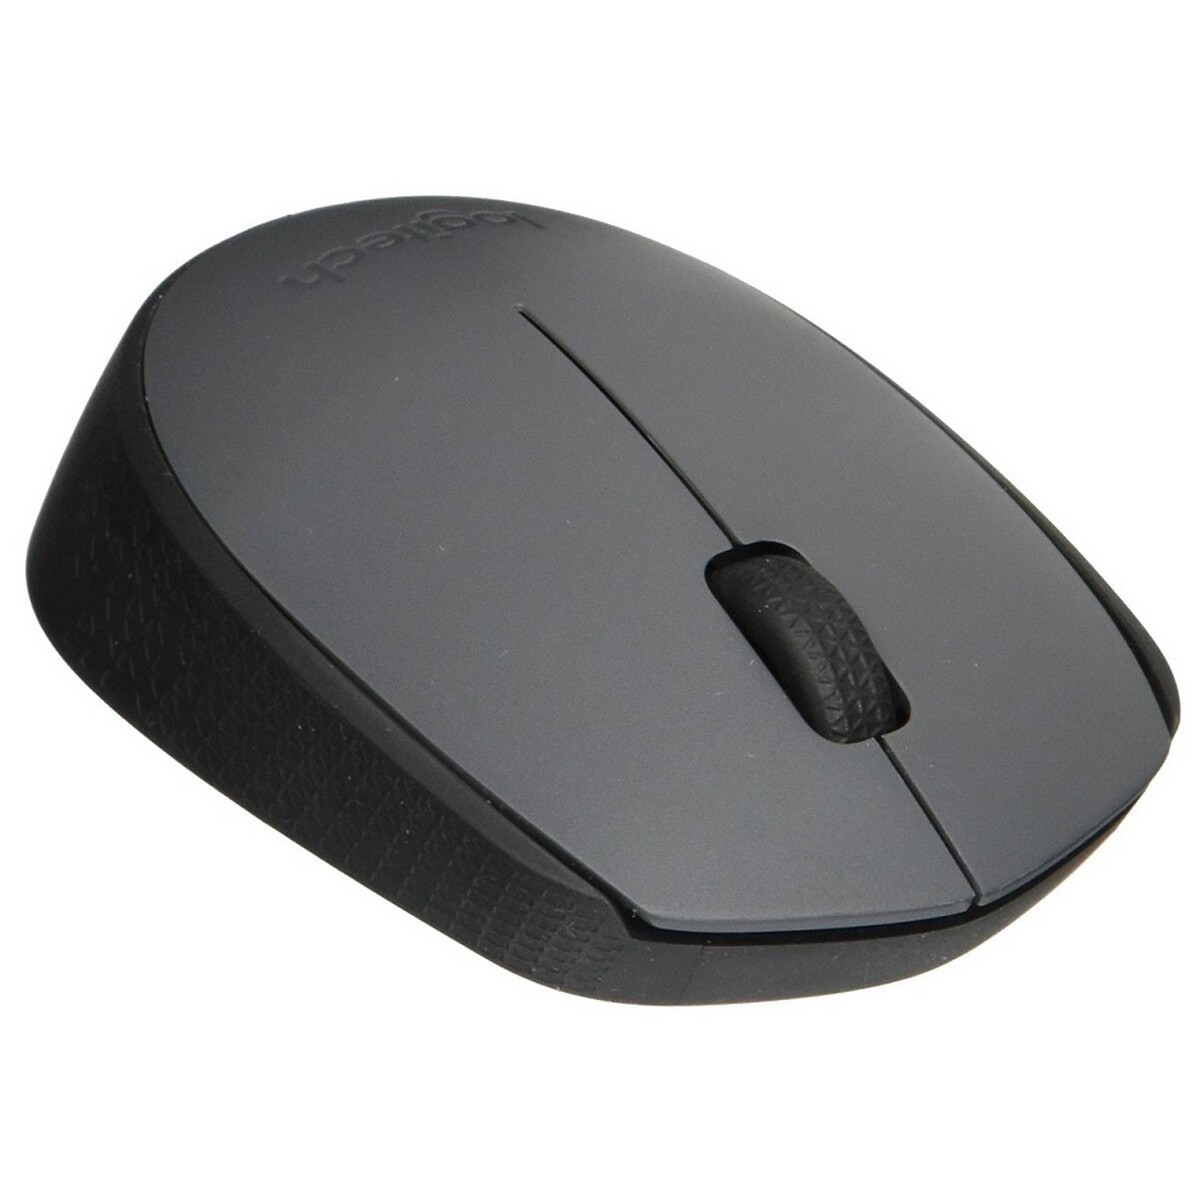 Logitech Wireless Mouse M170 Black